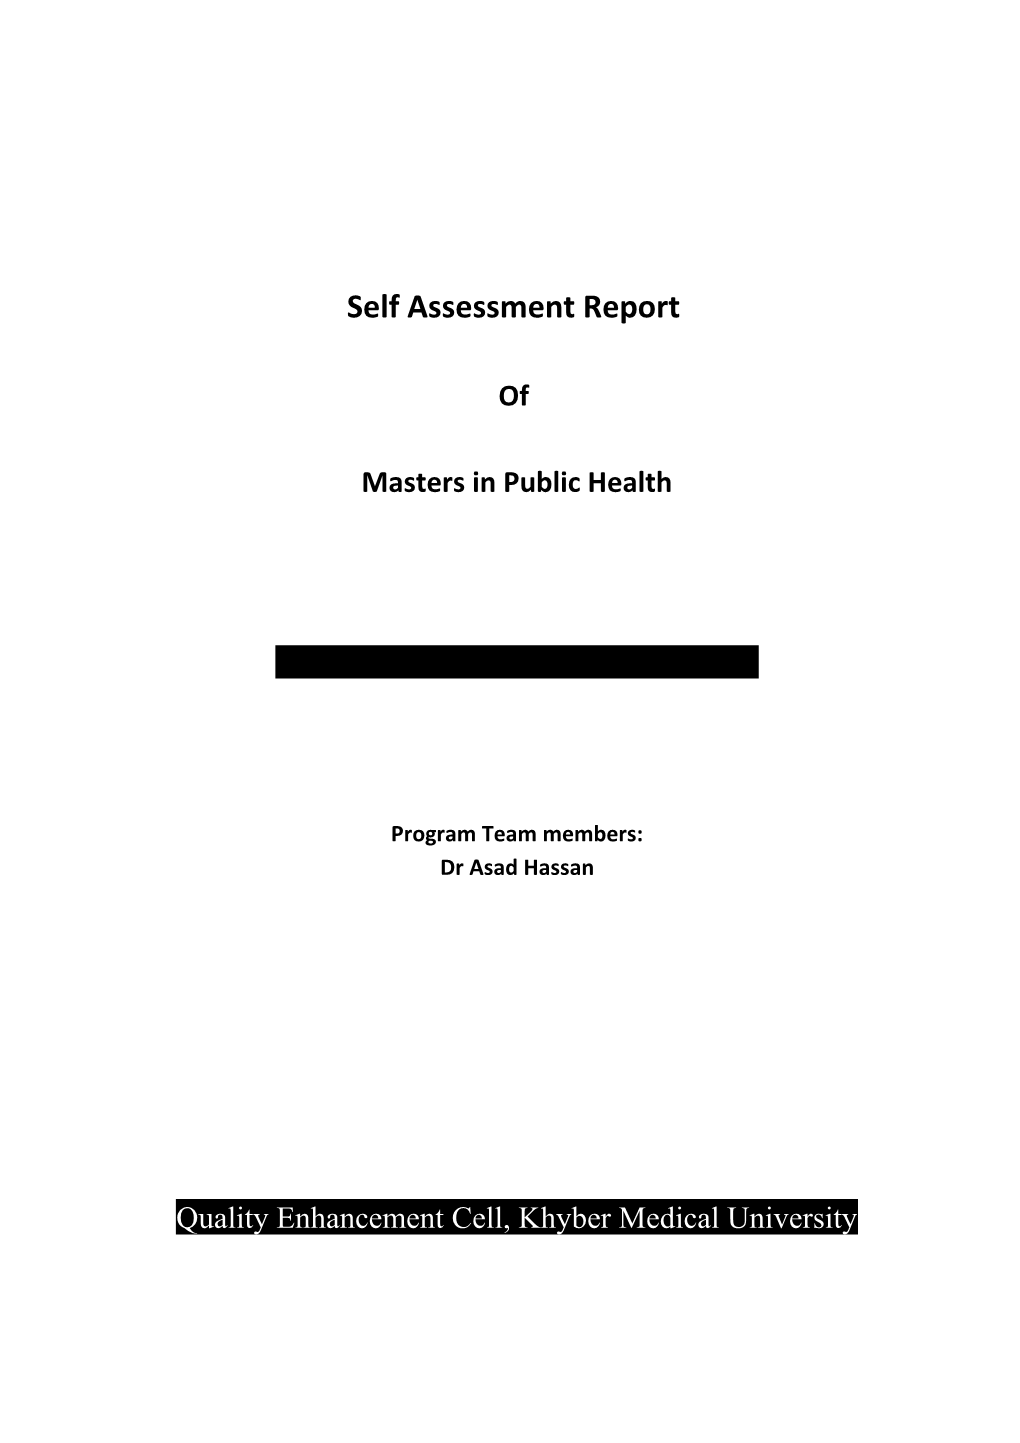 Self Assessment Report of Program of B